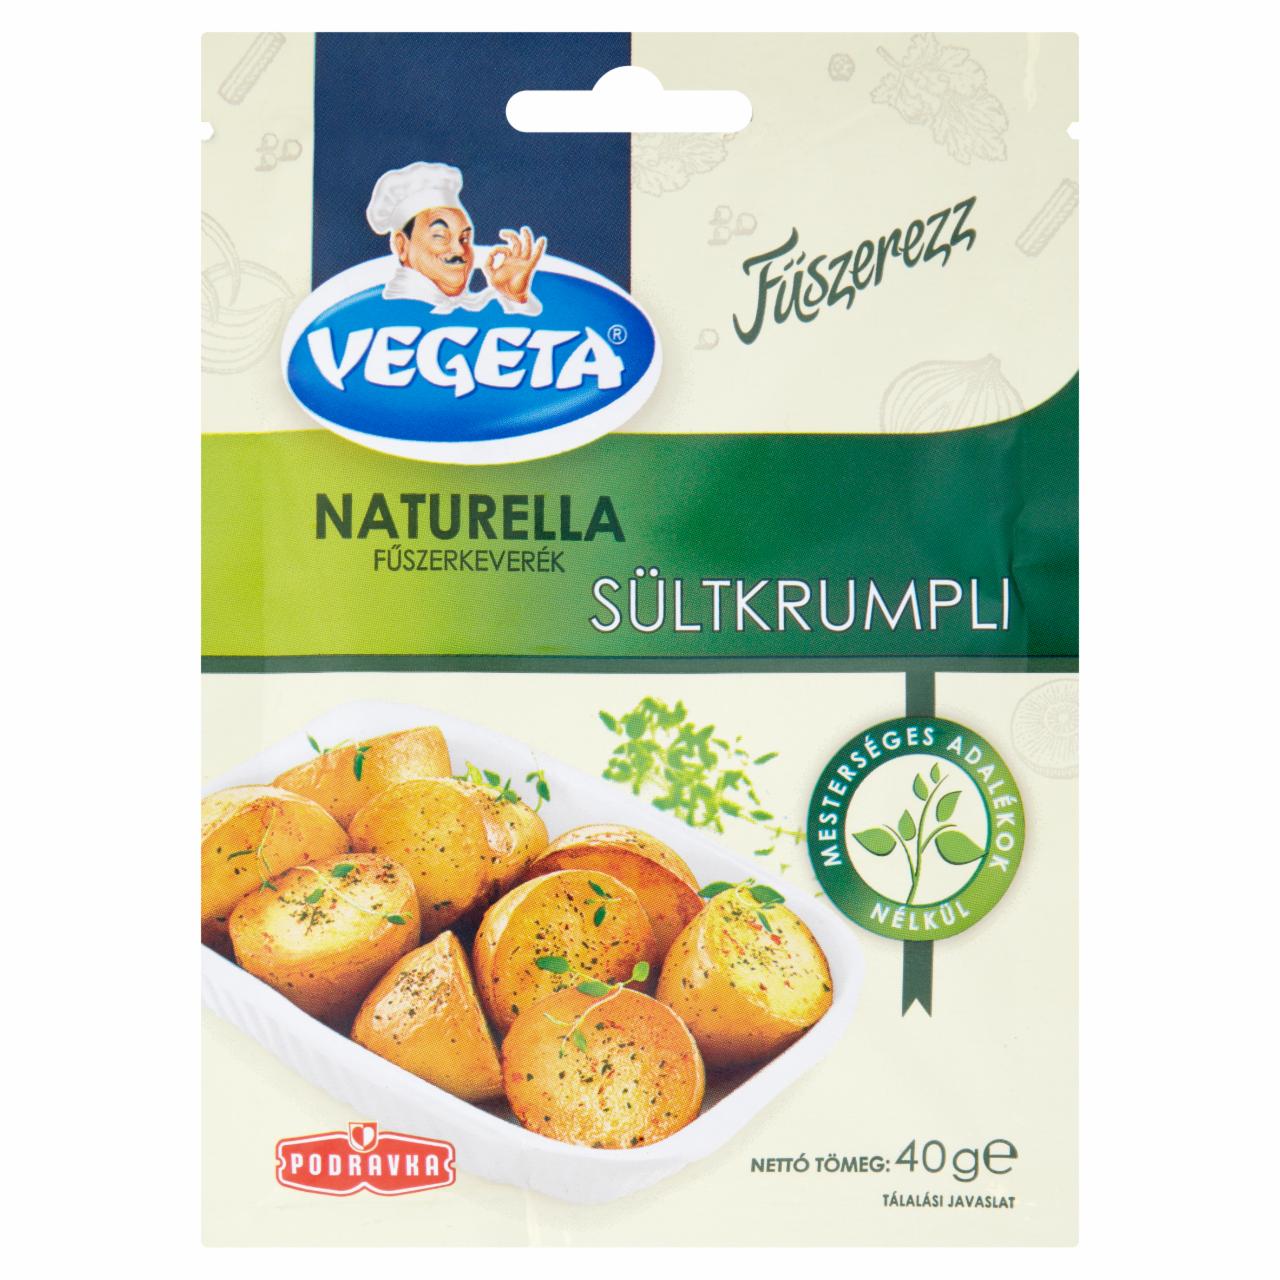 Képek - Vegeta Naturella sültkrumpli fűszerkeverék 40 g